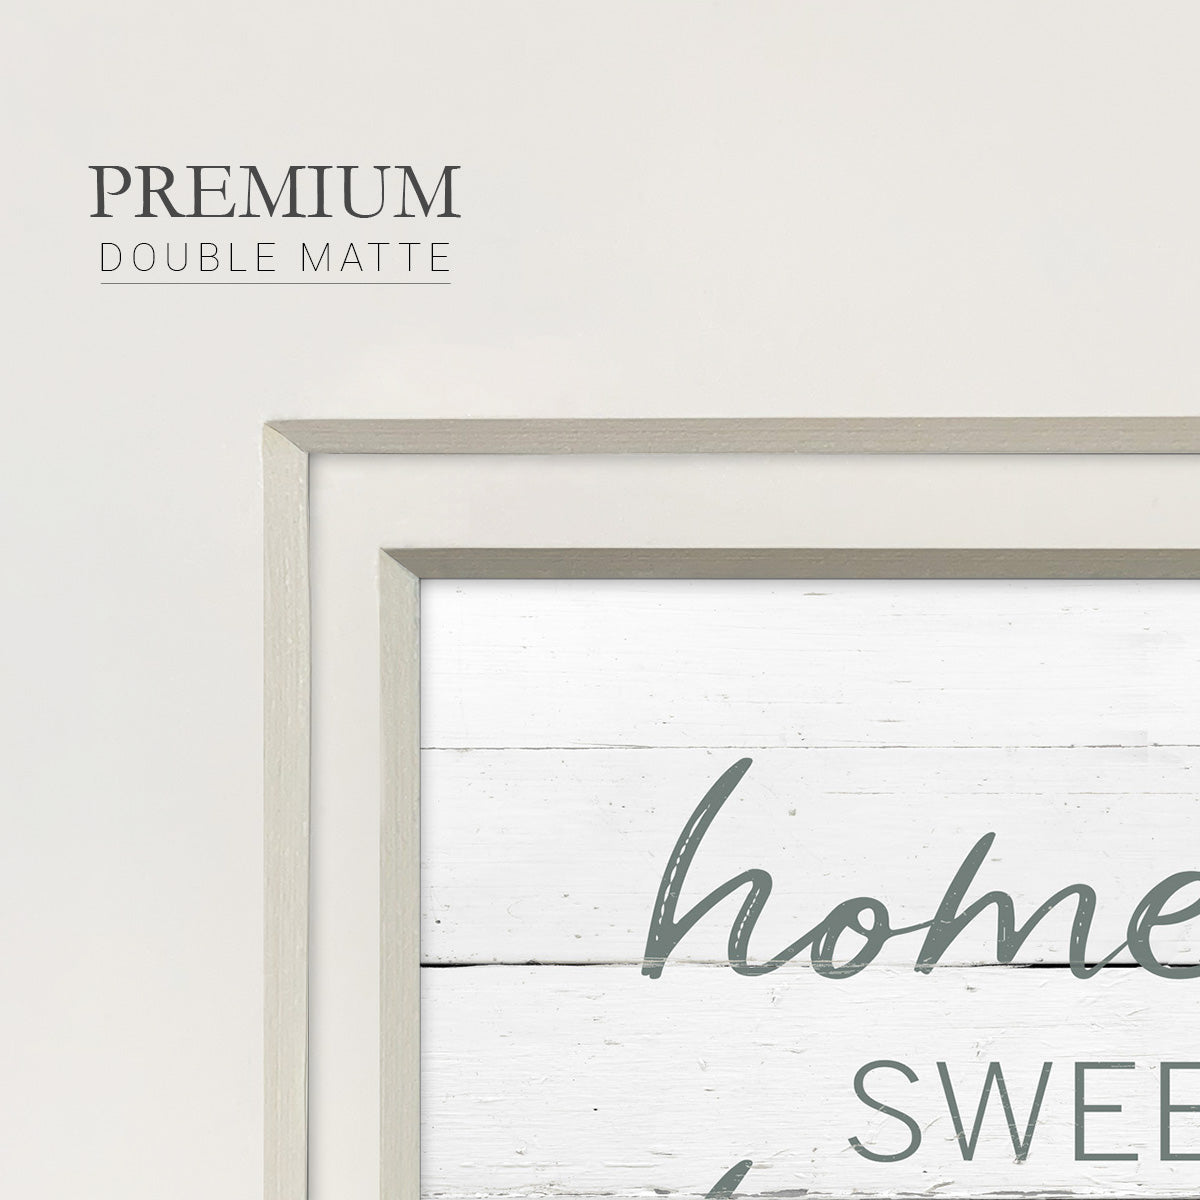 Eucalyptus Home Sweet Home Premium Framed Print Double Matboard